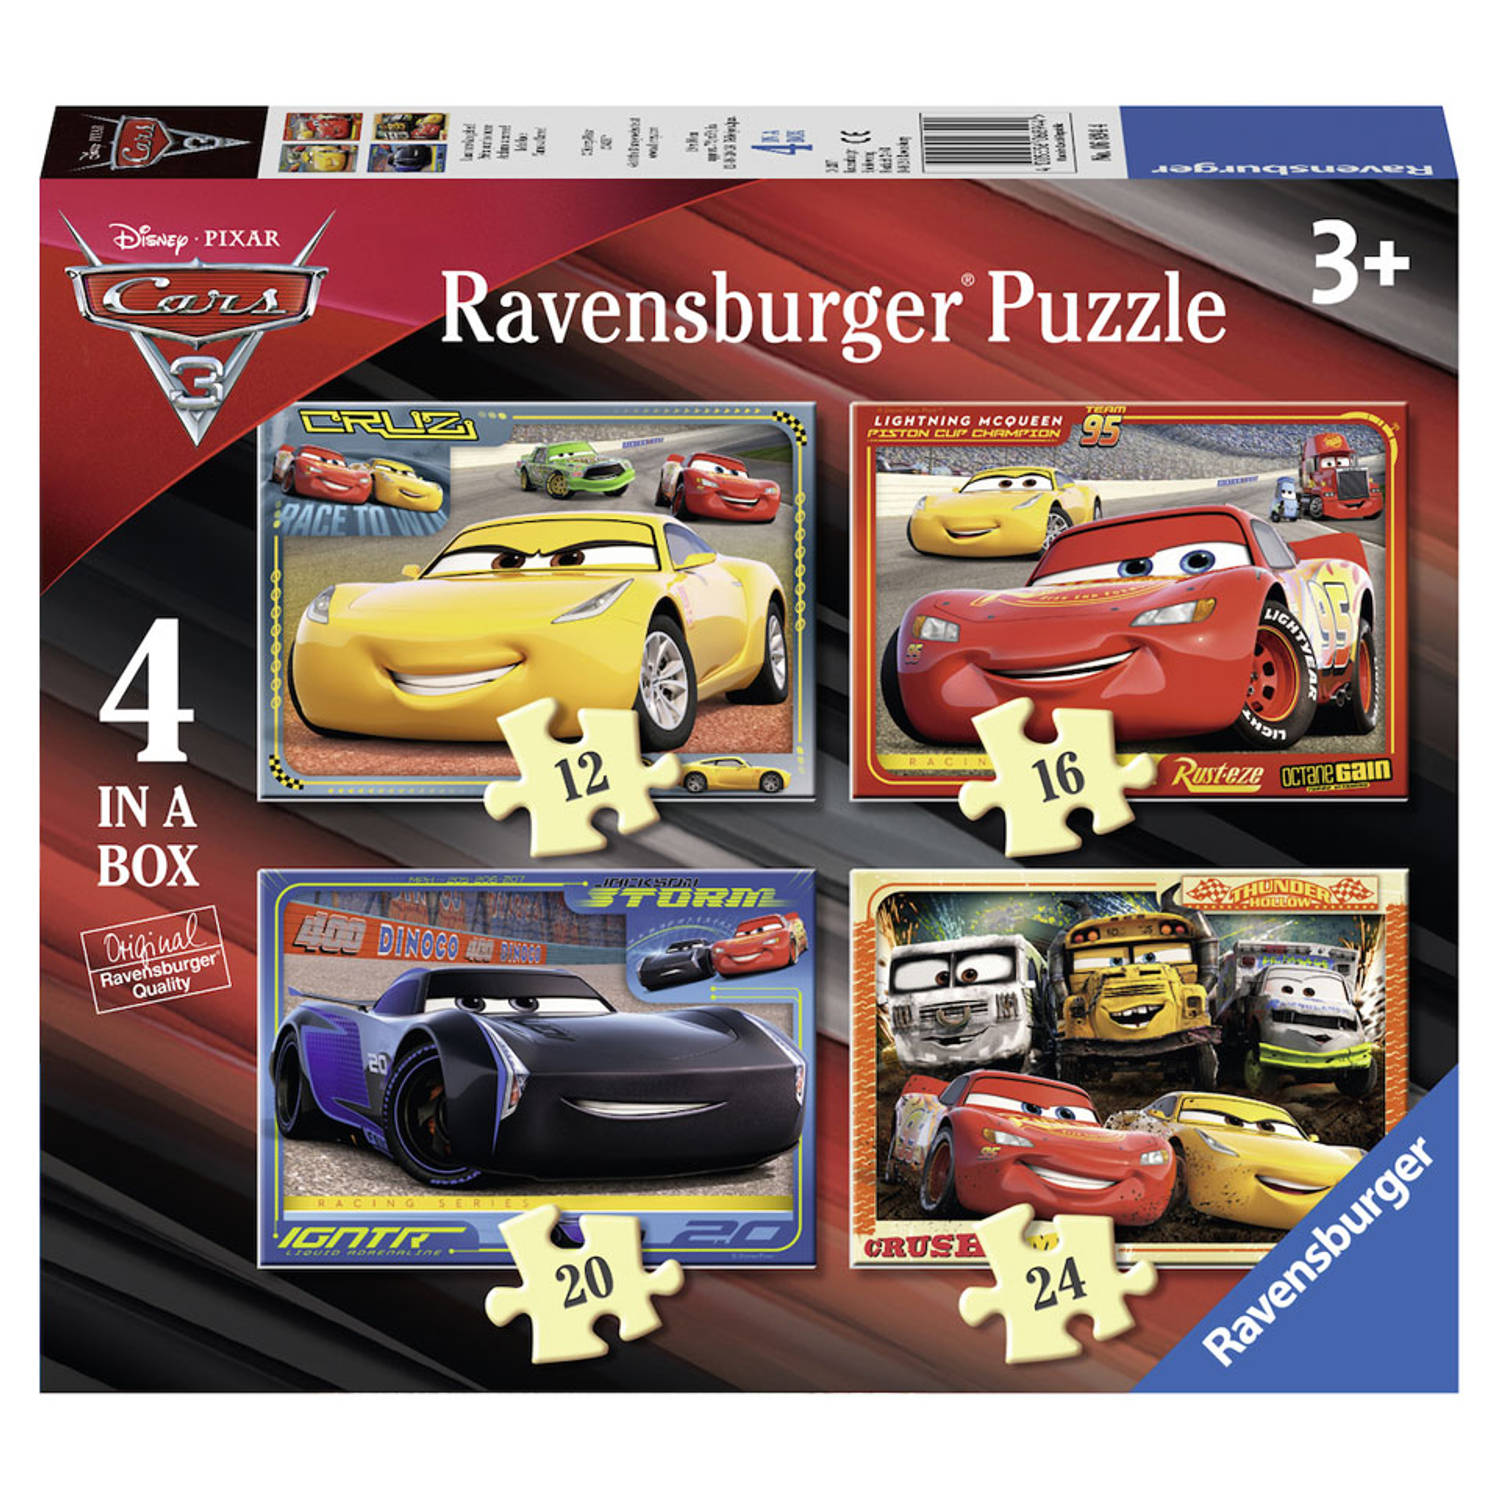 Puzzel Ravensburger Cars 3 4x puzzels 12+16+20+24 stuks